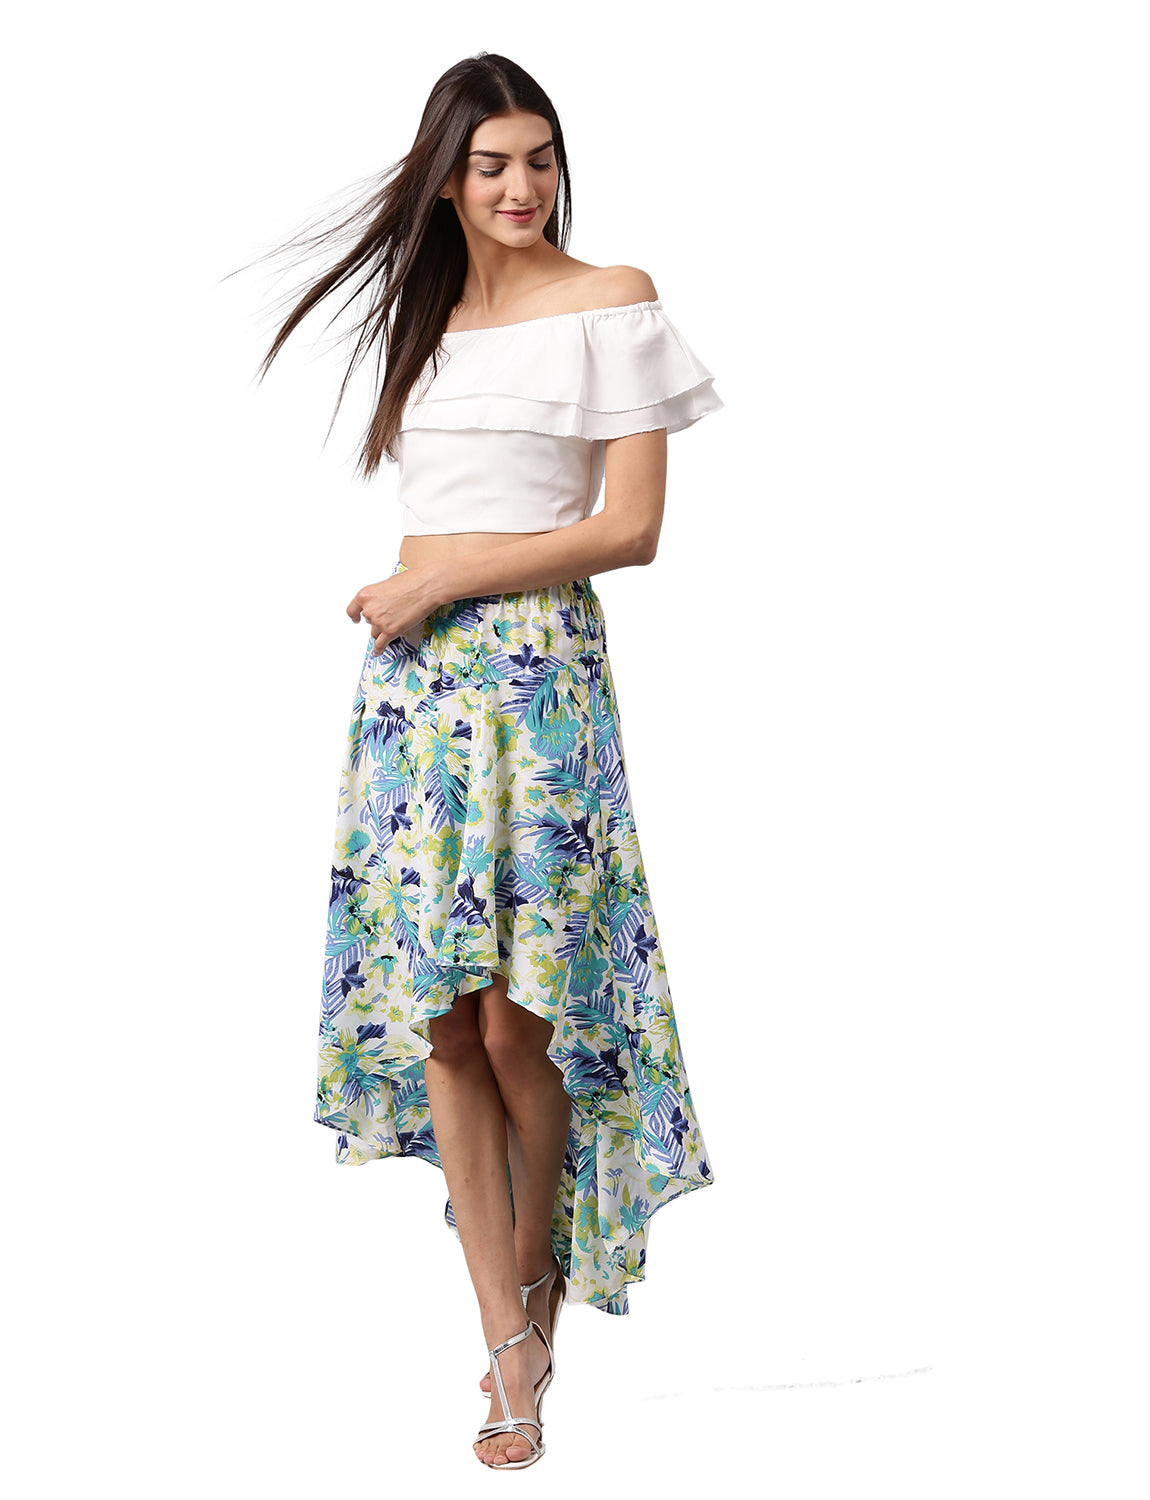 Athena White & Blue Floral Printed Knee-Length Skirt - Athena Lifestyle